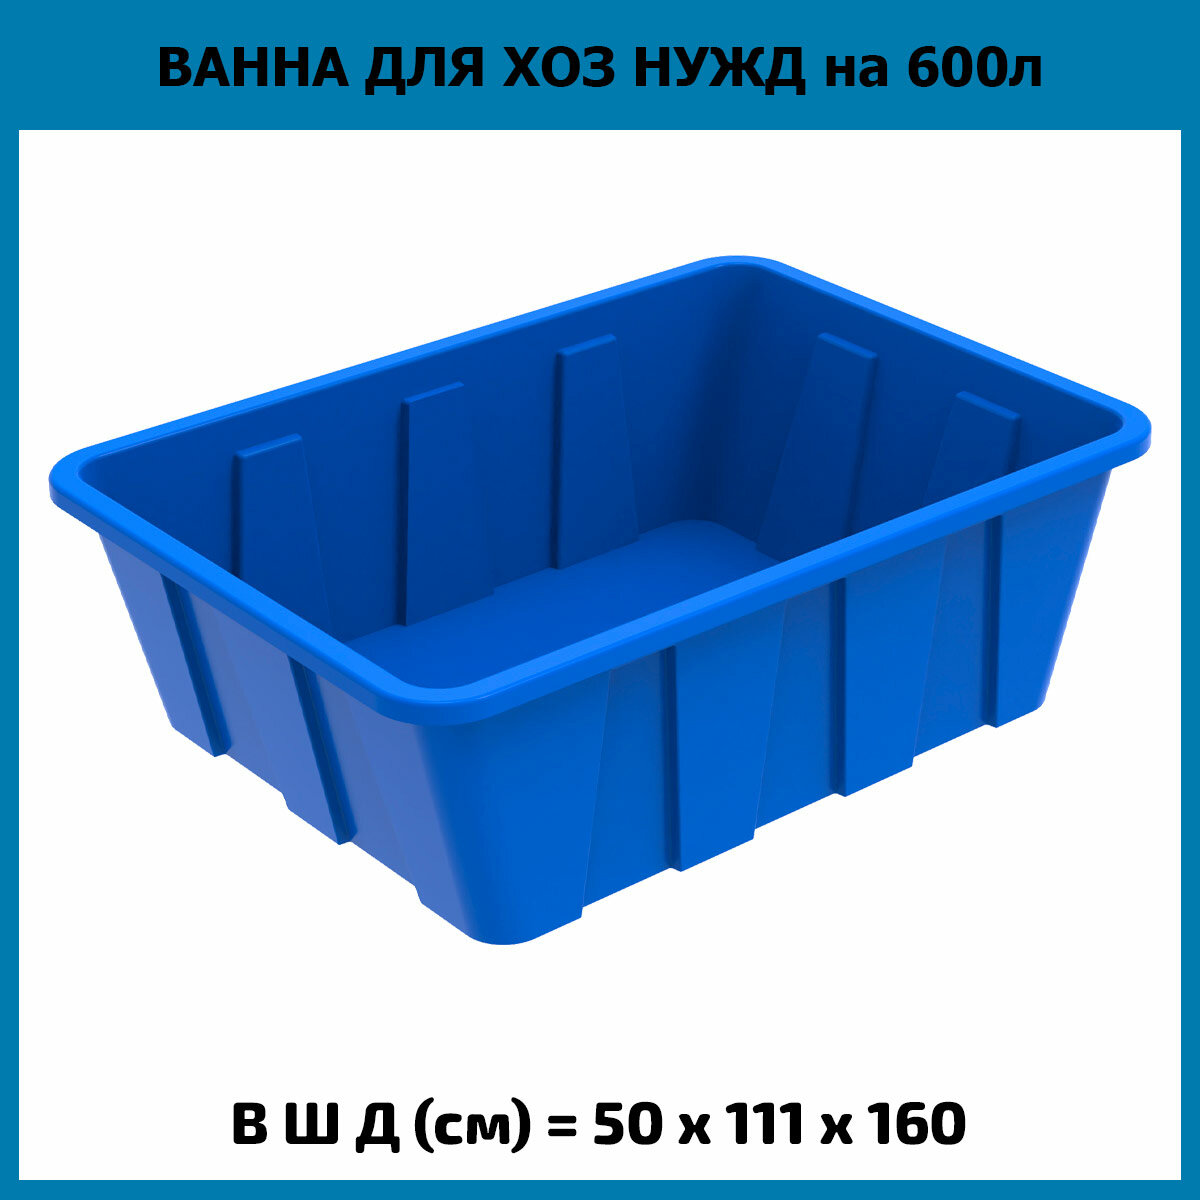 Ванна для хоз нужд на 600 литров, KN 600 (ЭкоПром) - фотография № 1